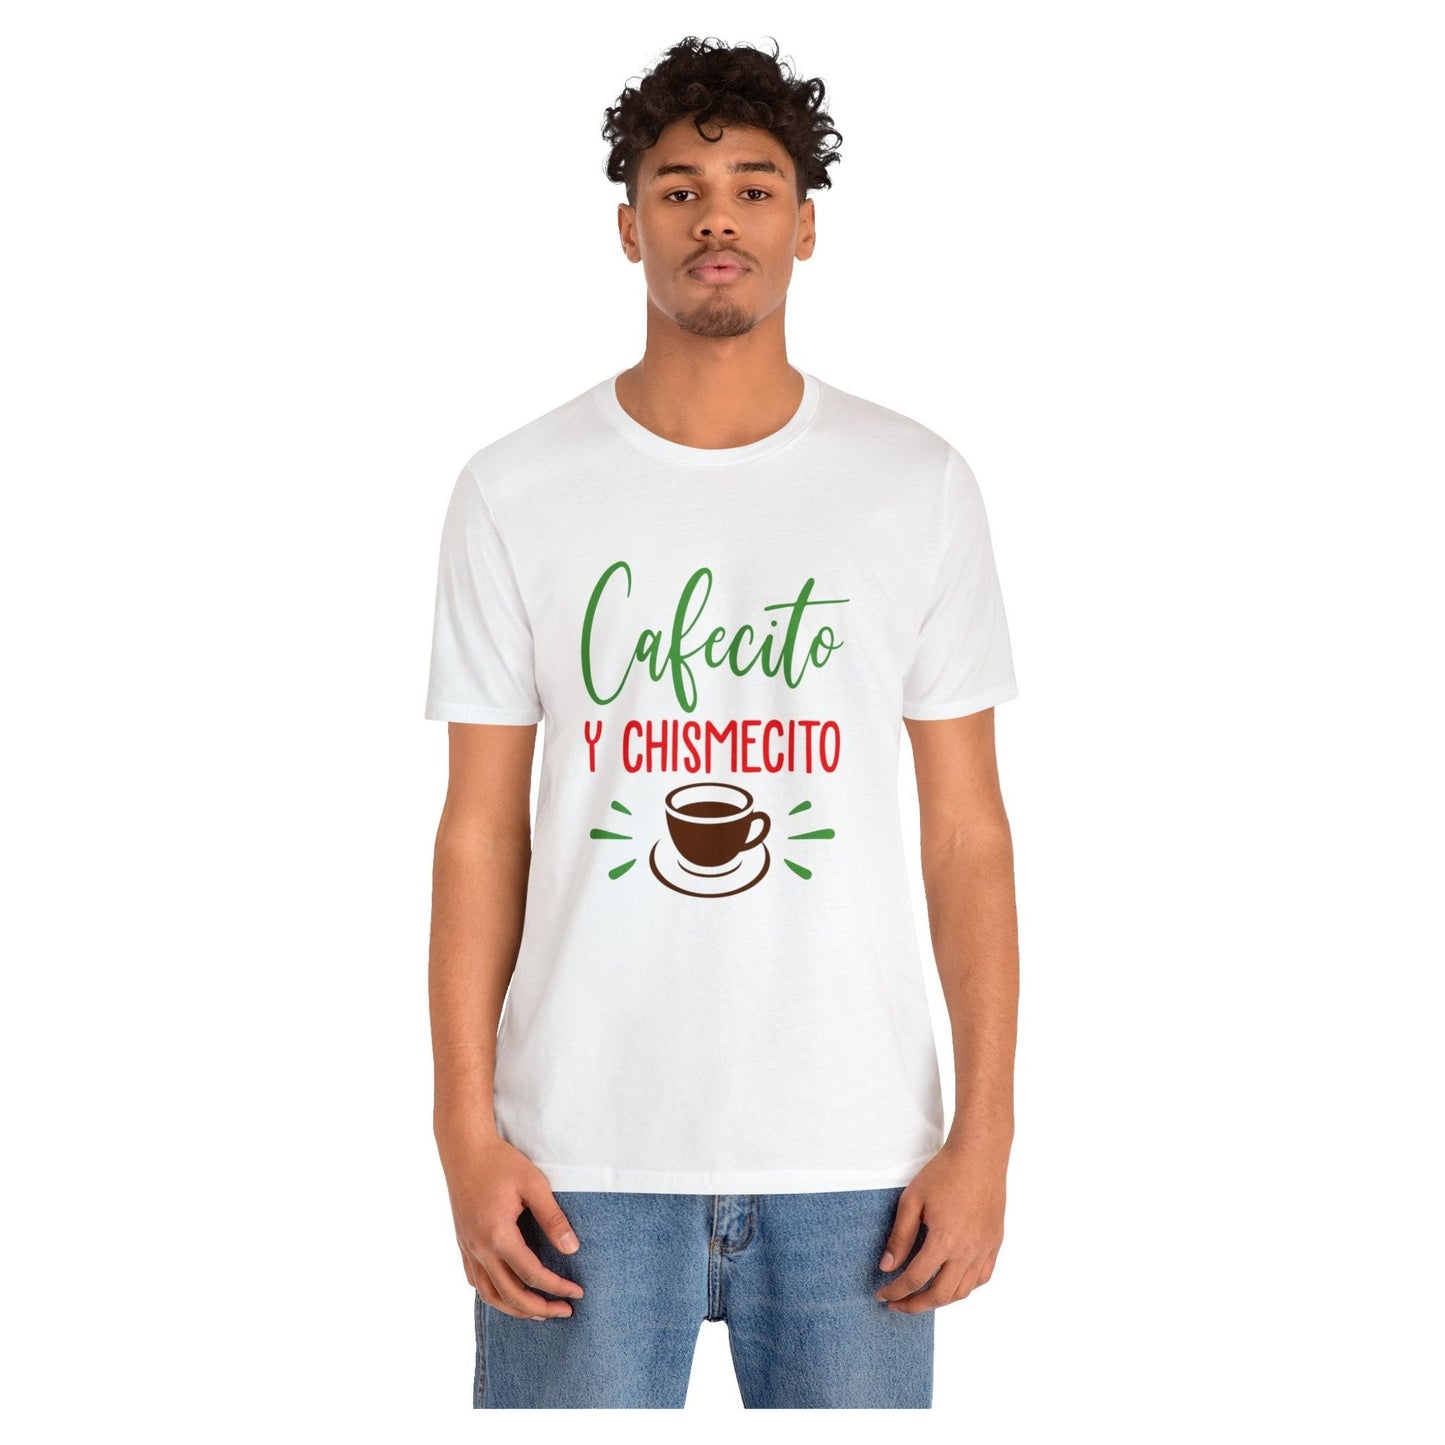 T-shirt - Cafecito and Chismesito